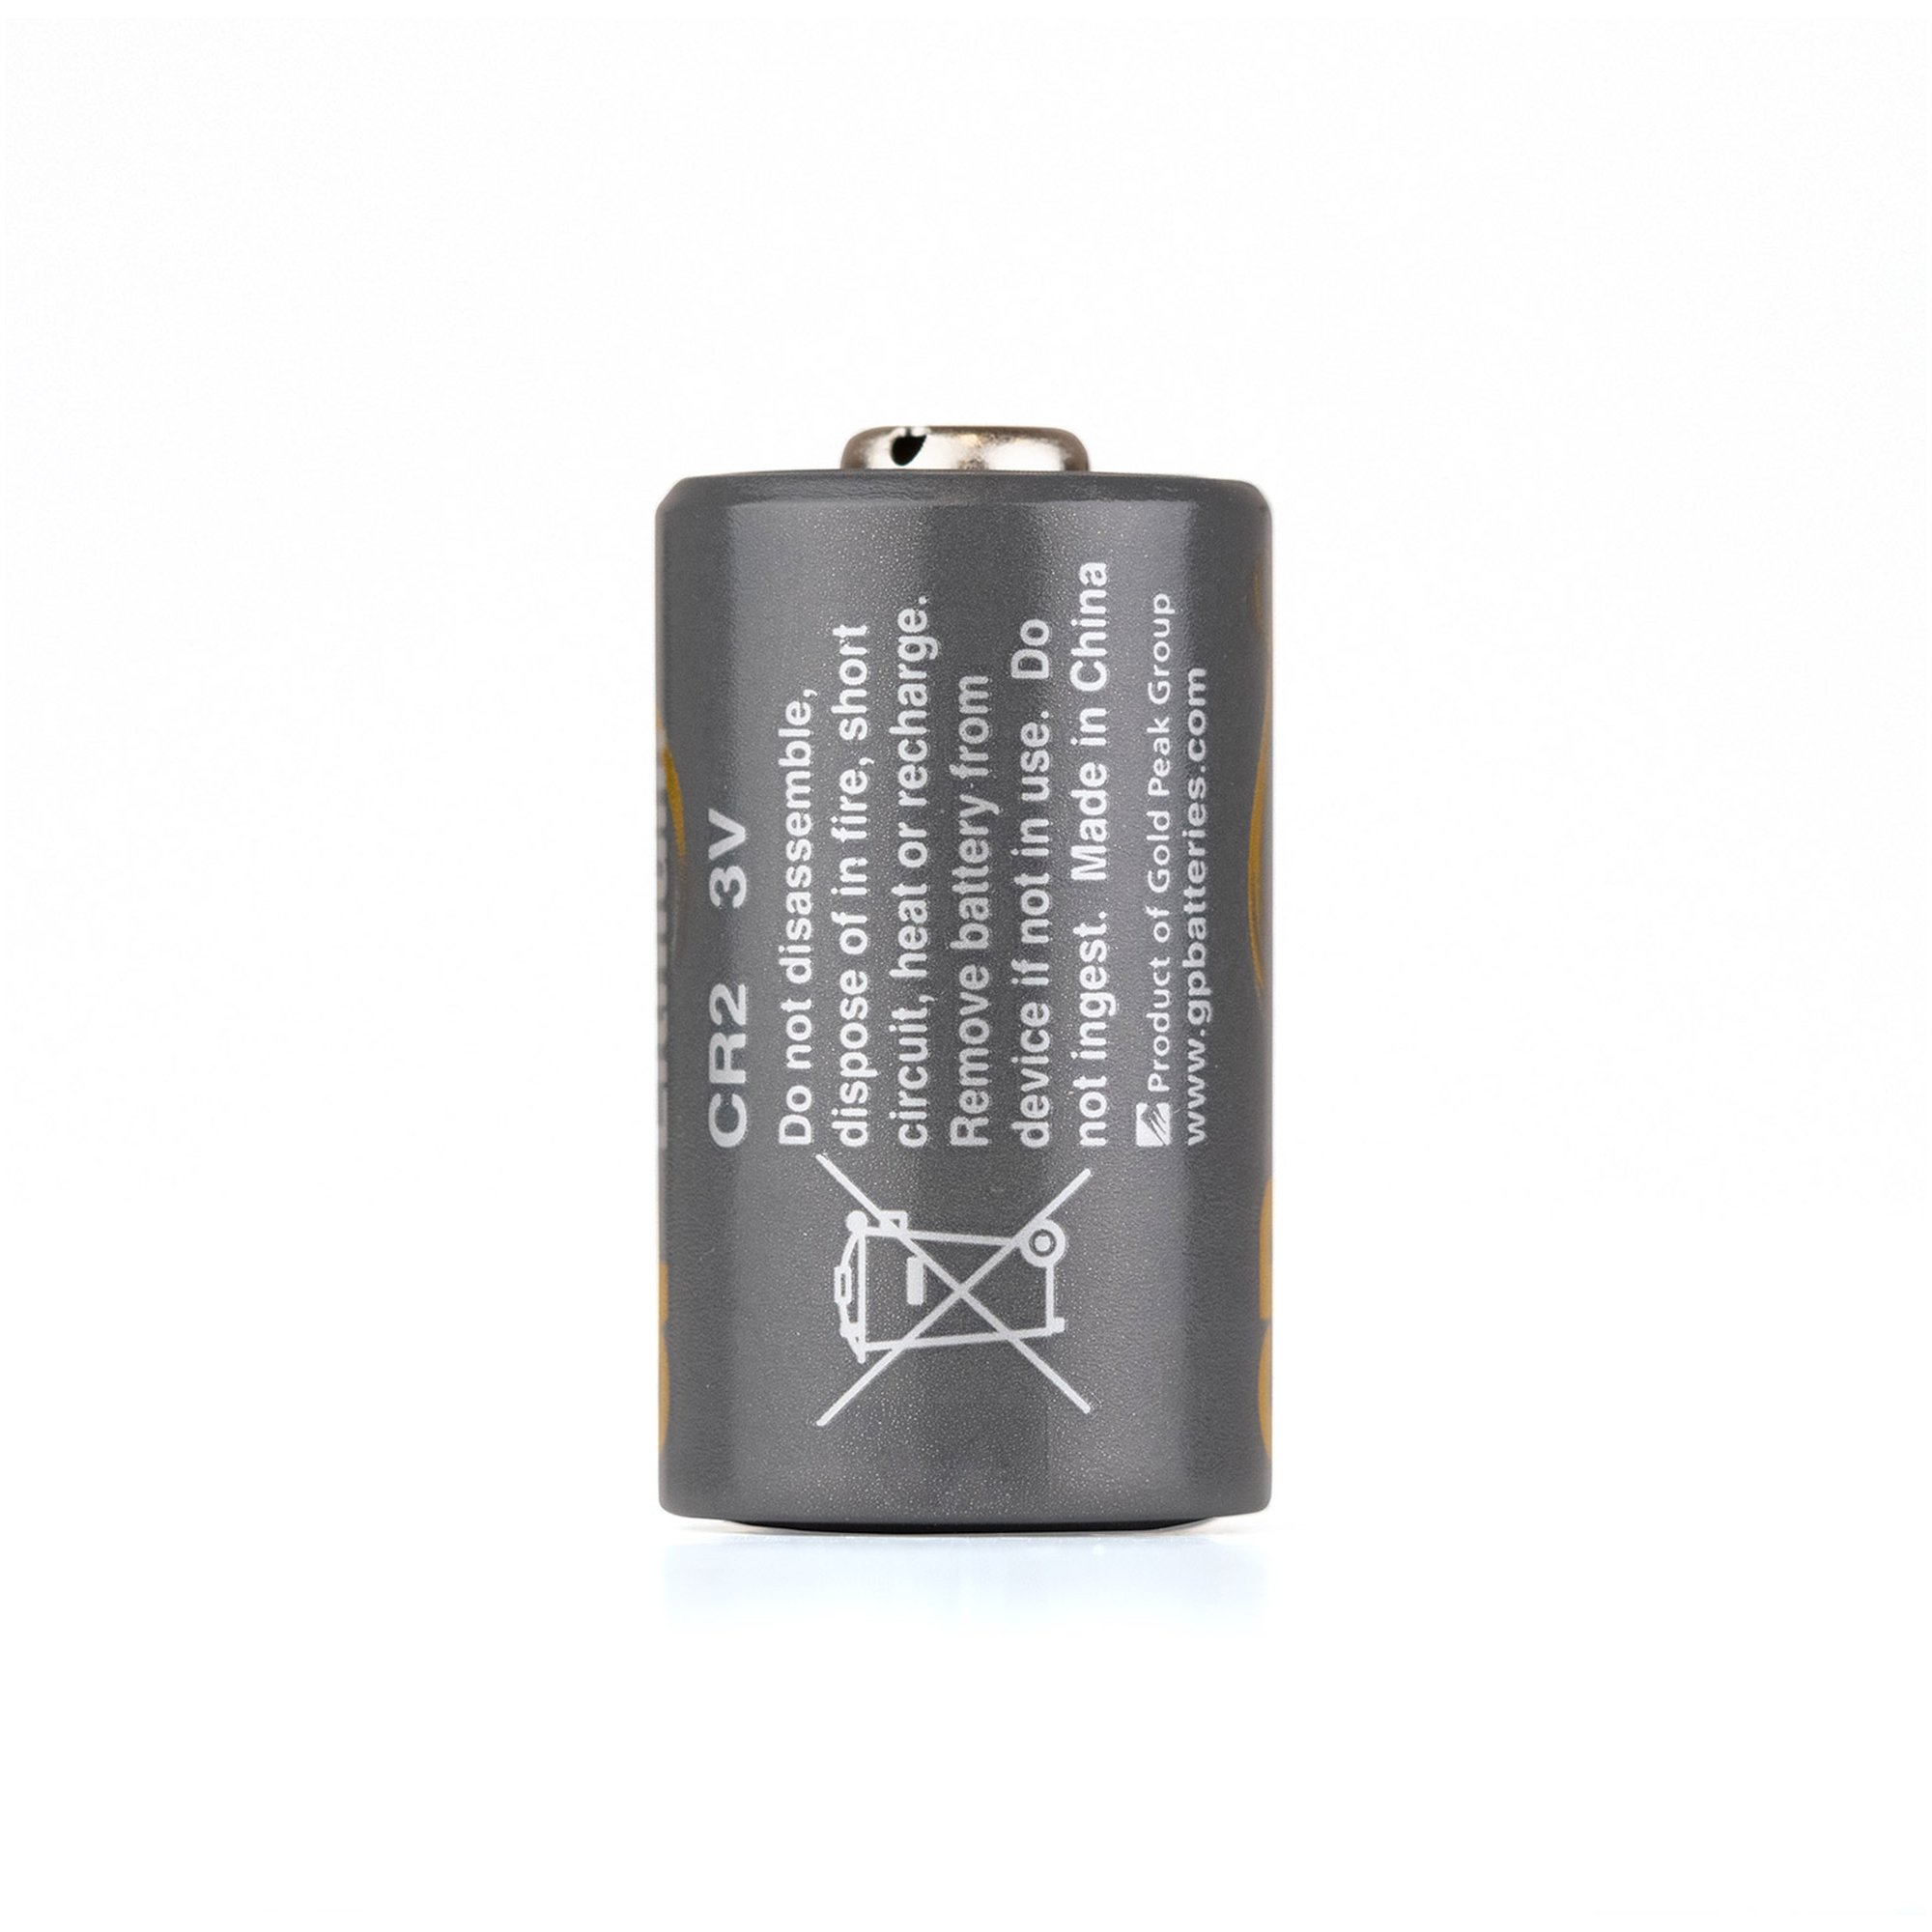 CR2 Batterie GP Lithium 3V 1 Stück